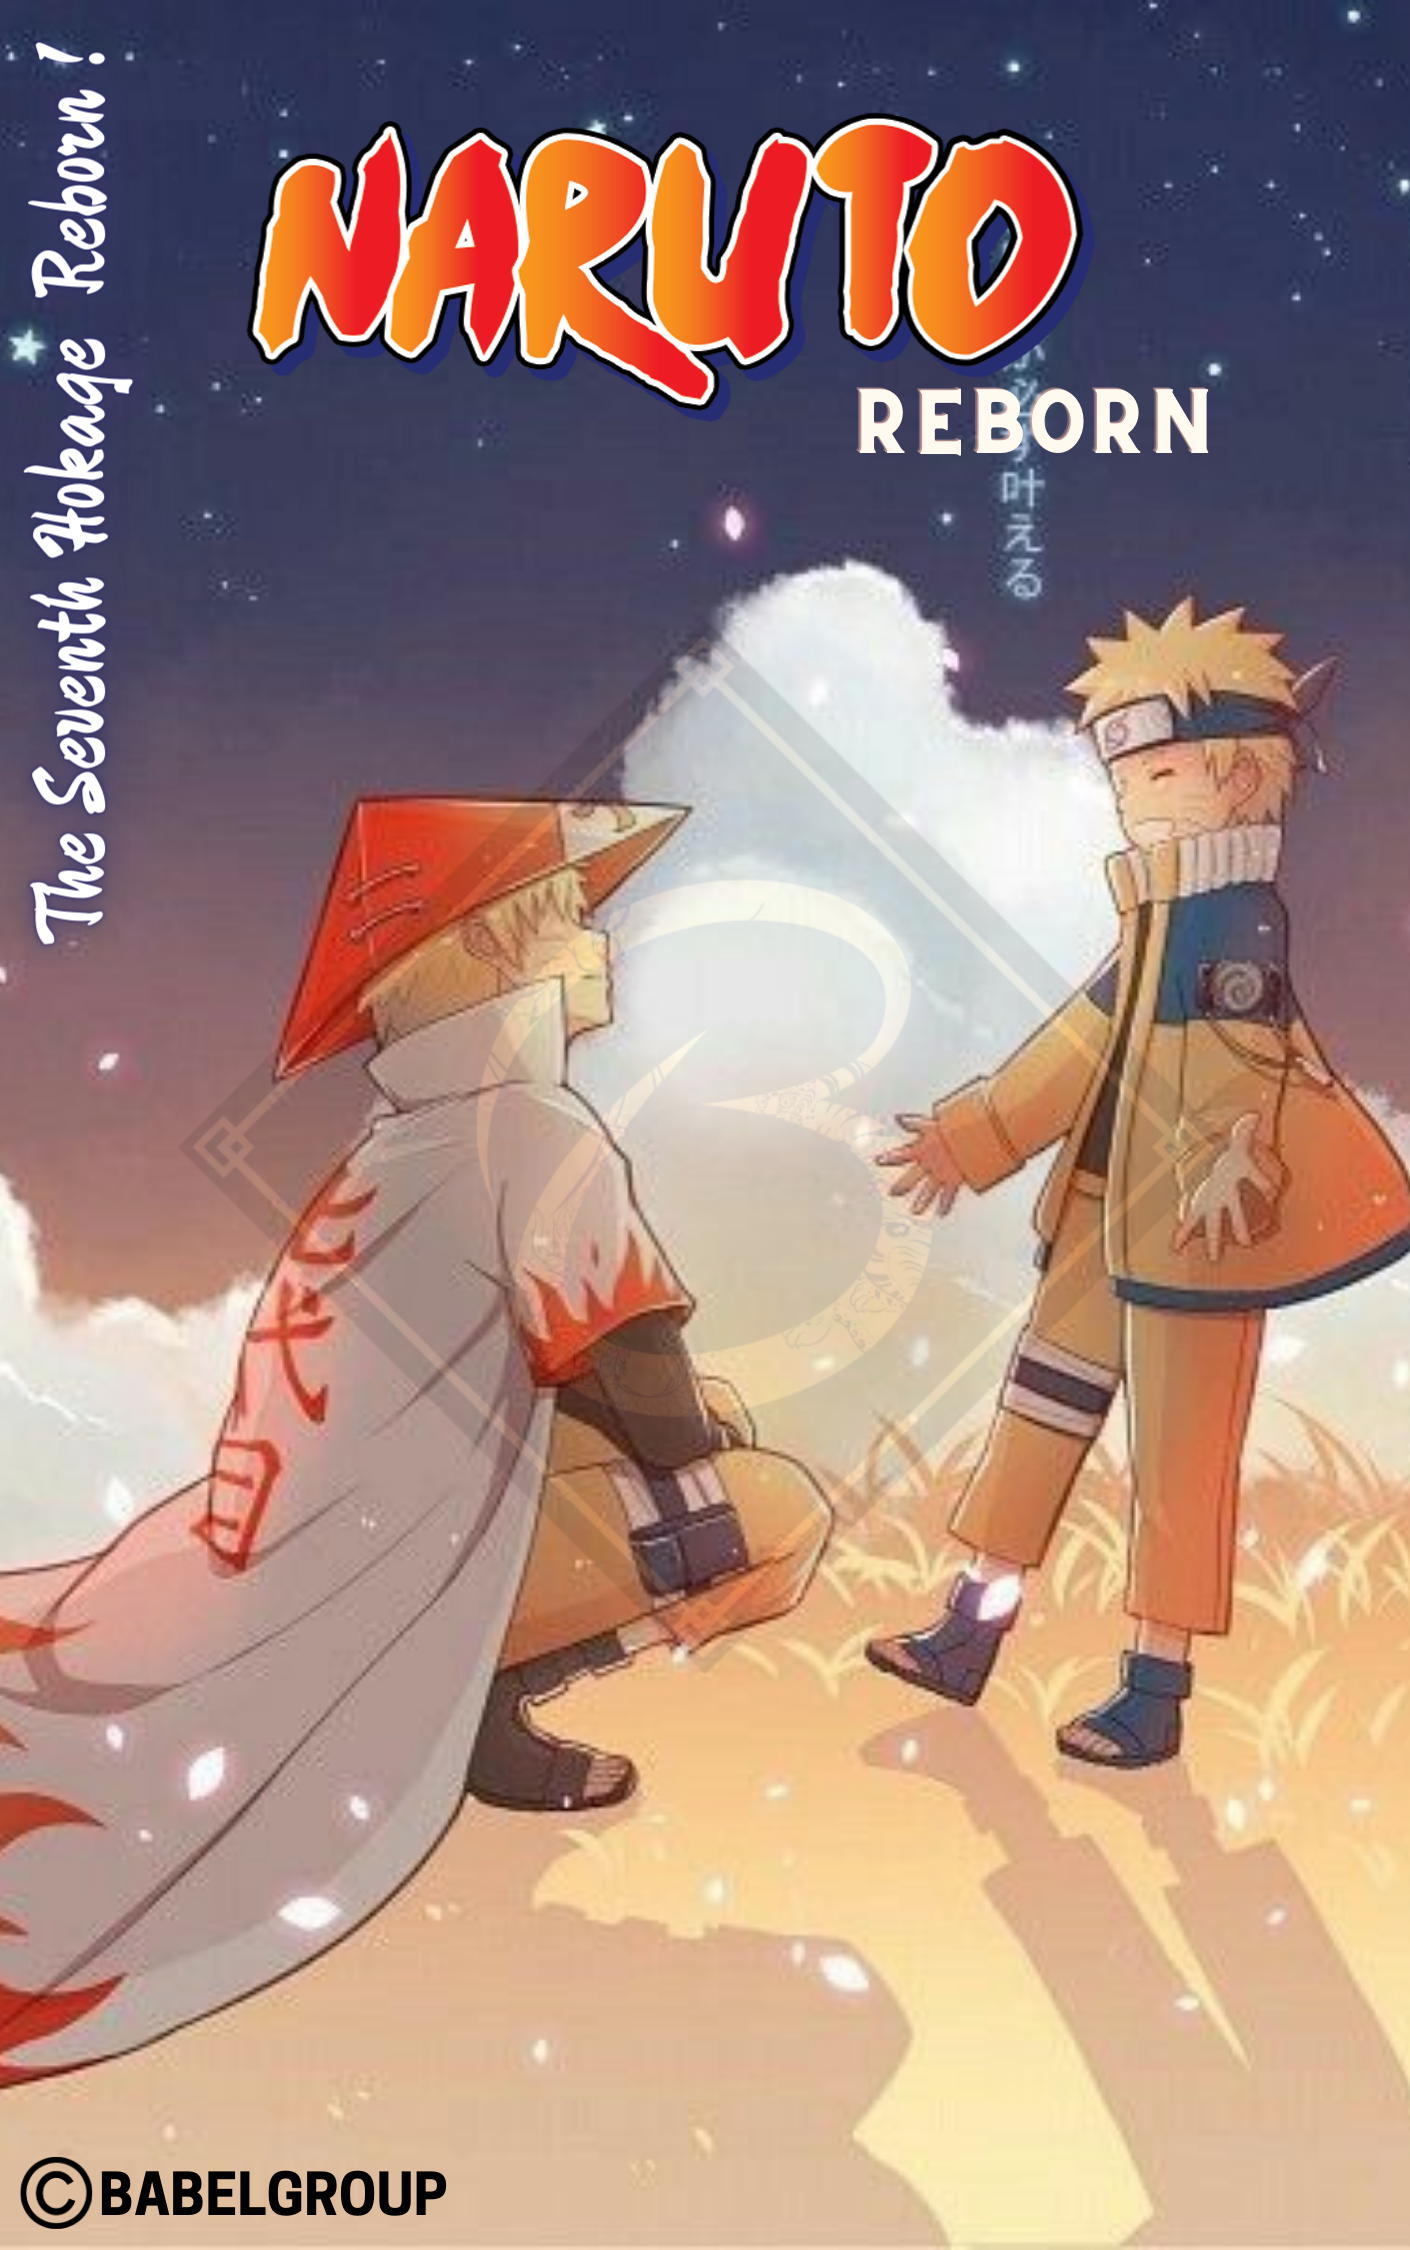 Read Naruto: Reborn As Boruto - High_priest6 - WebNovel